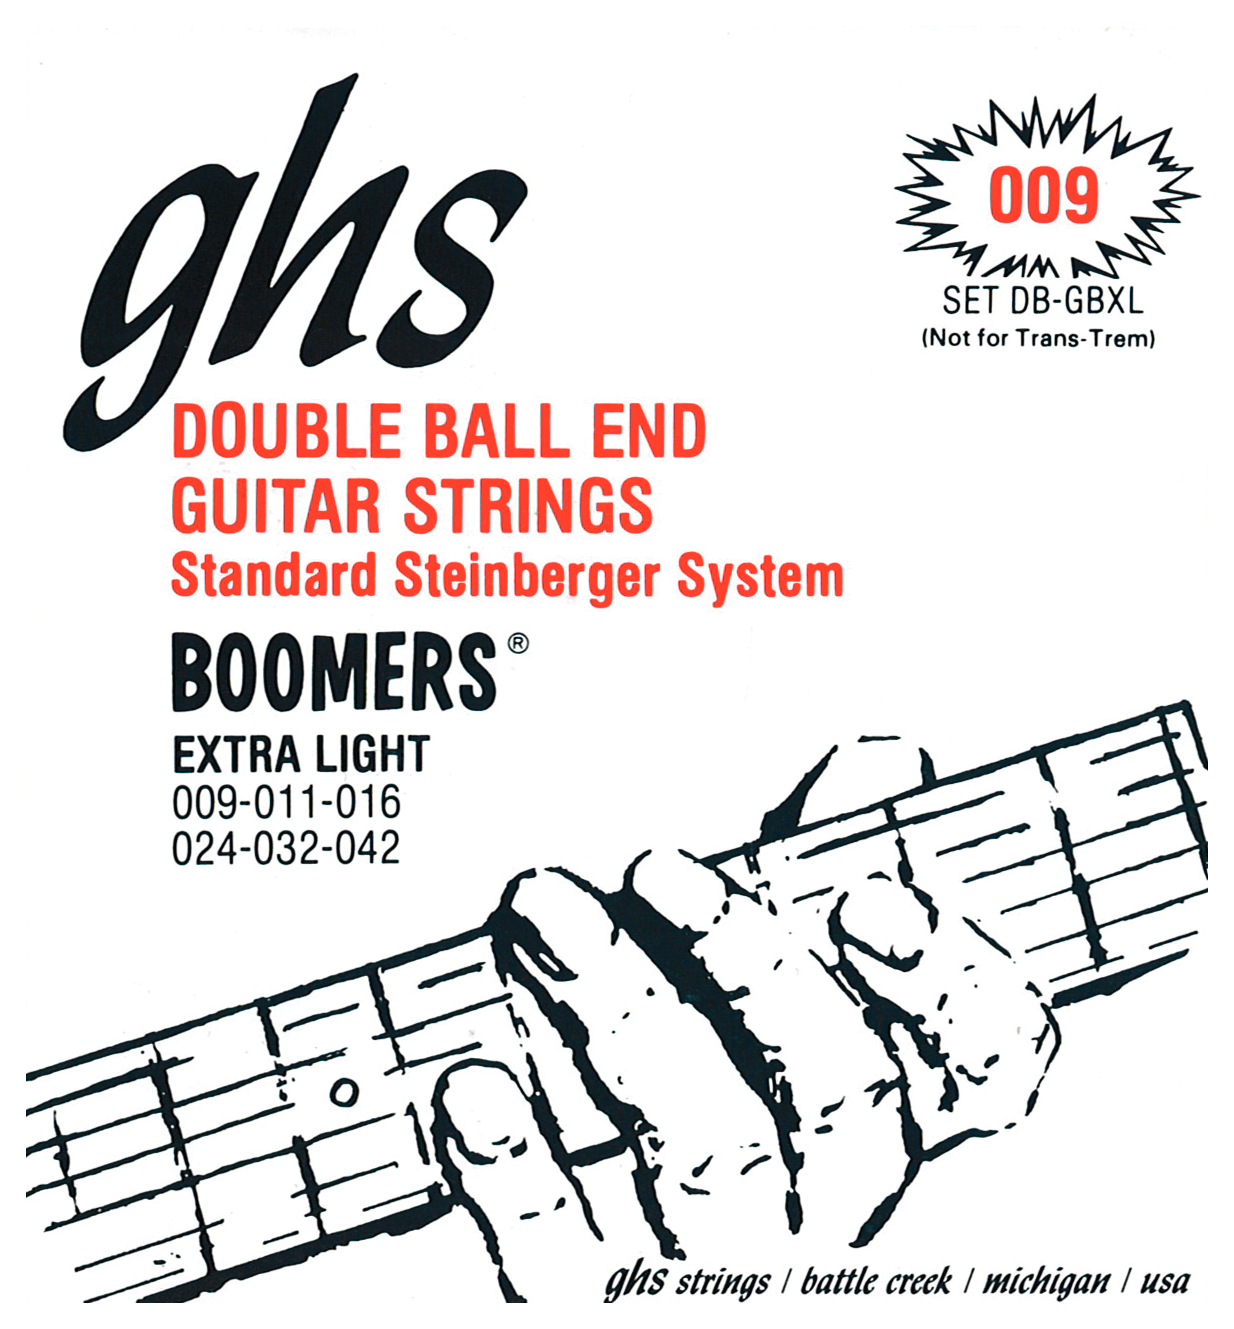 GHS DB-GBXL Boomers 009-042 Electric Guitar 6-String Set